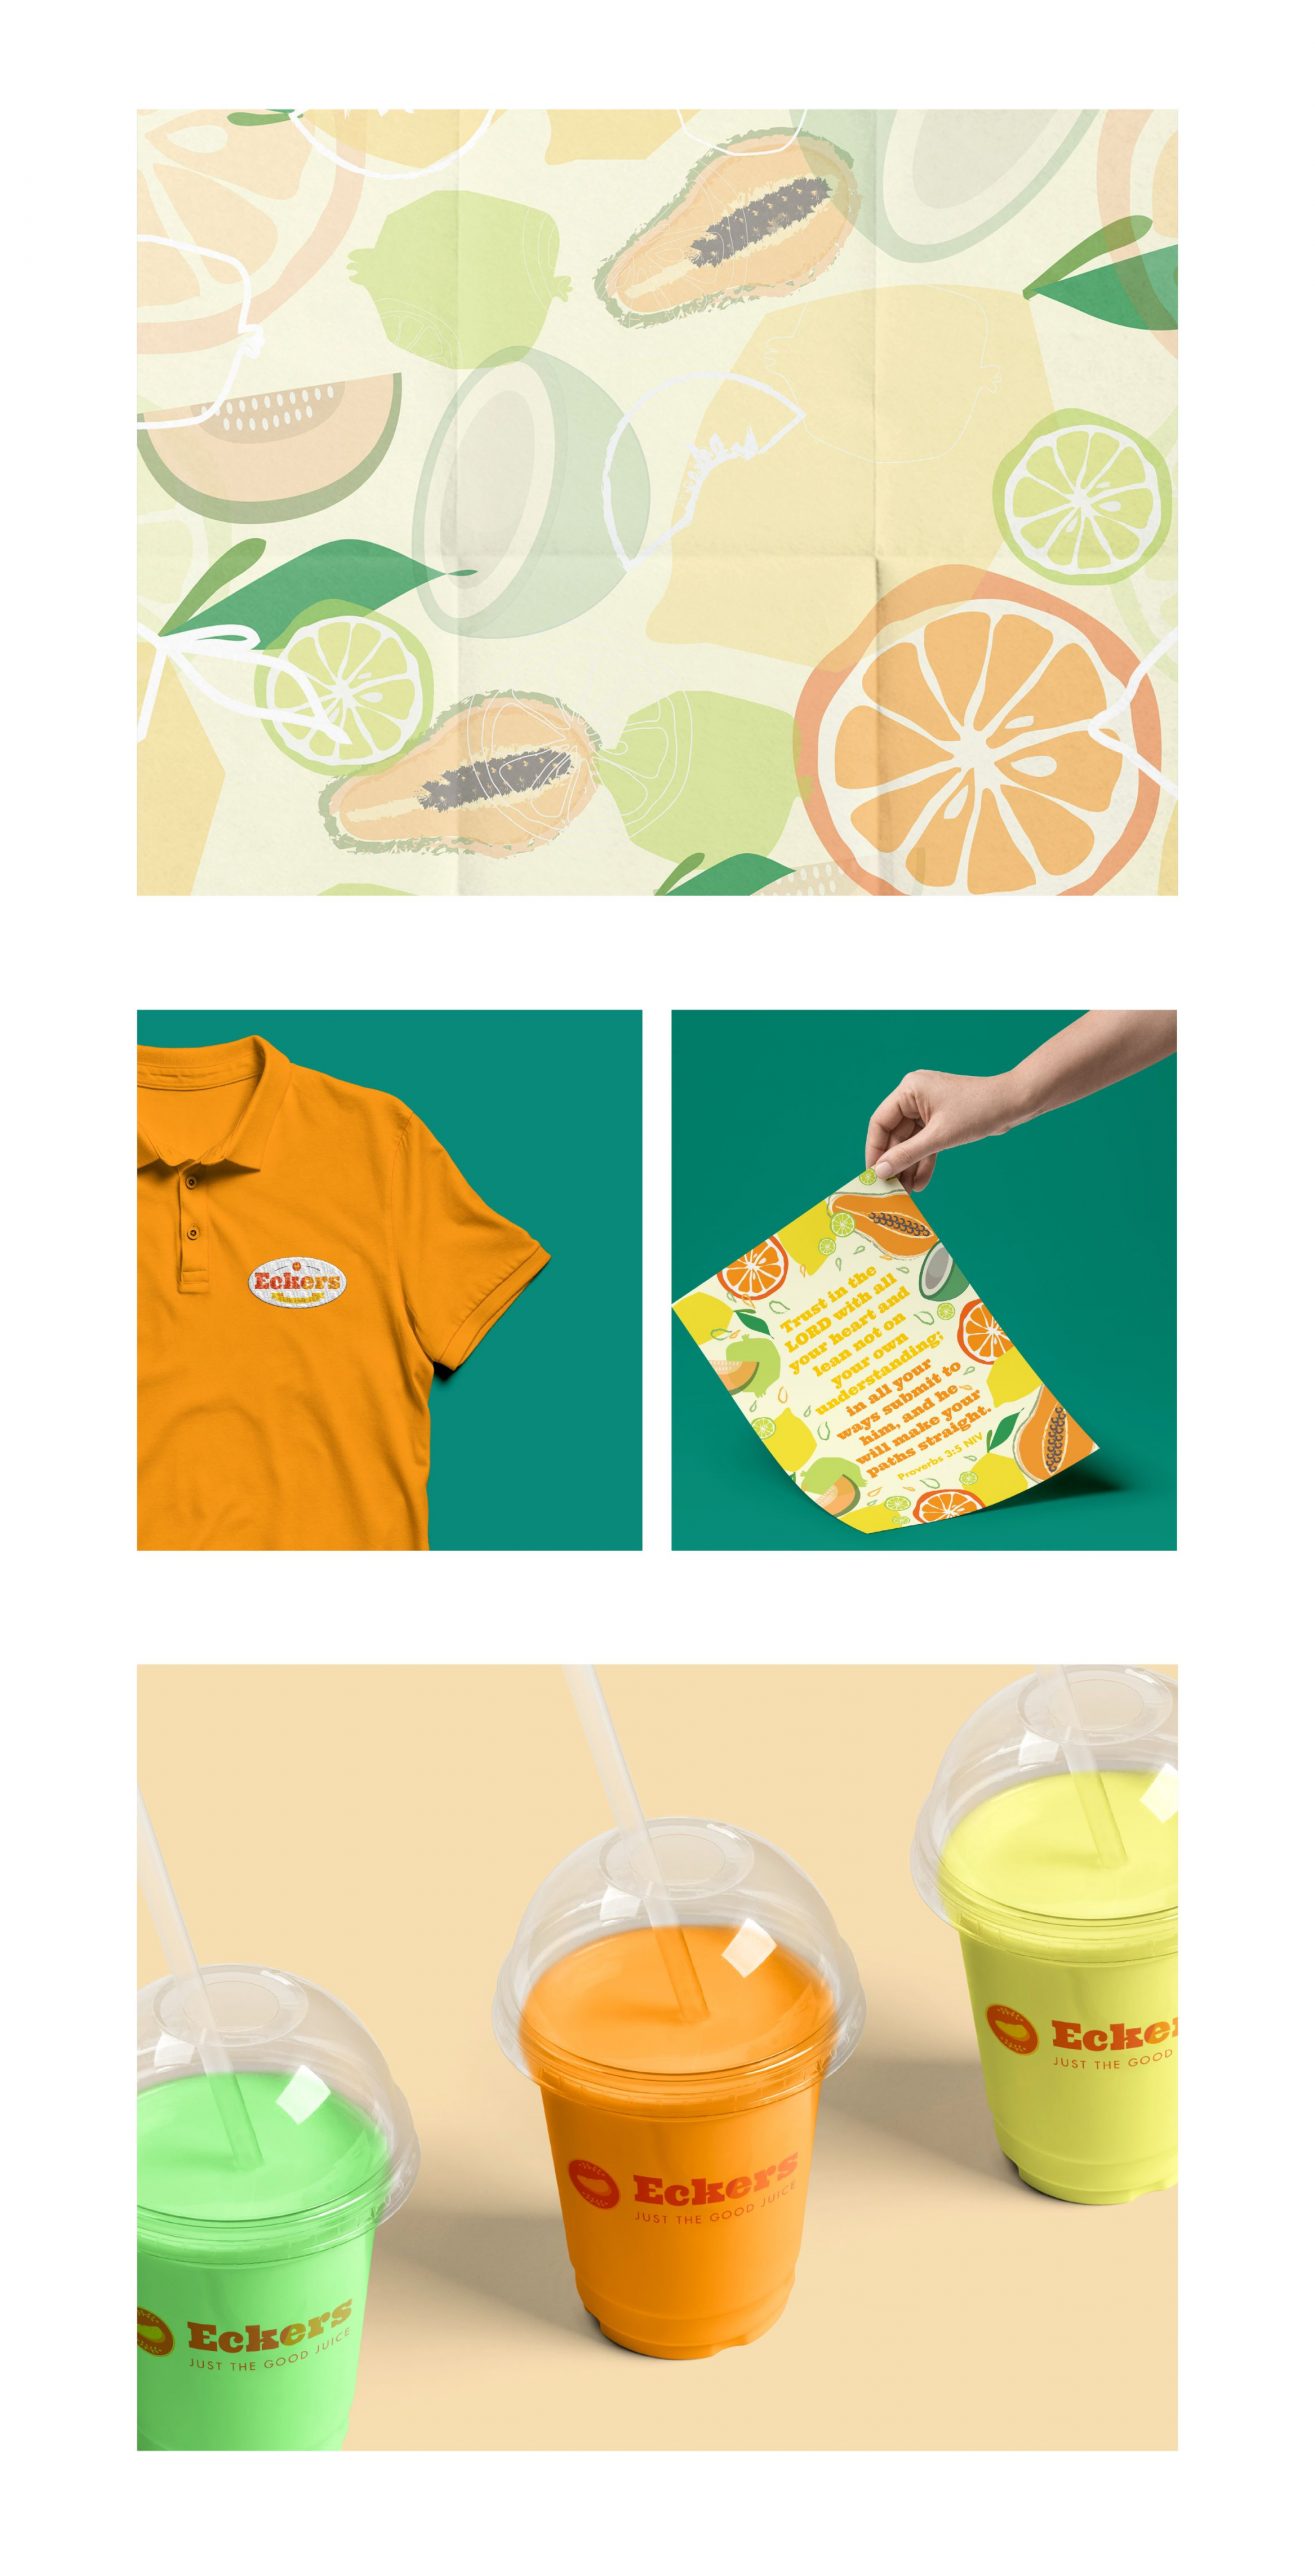 Images of Illustration of fruits, Tshirt design, poster design and product design